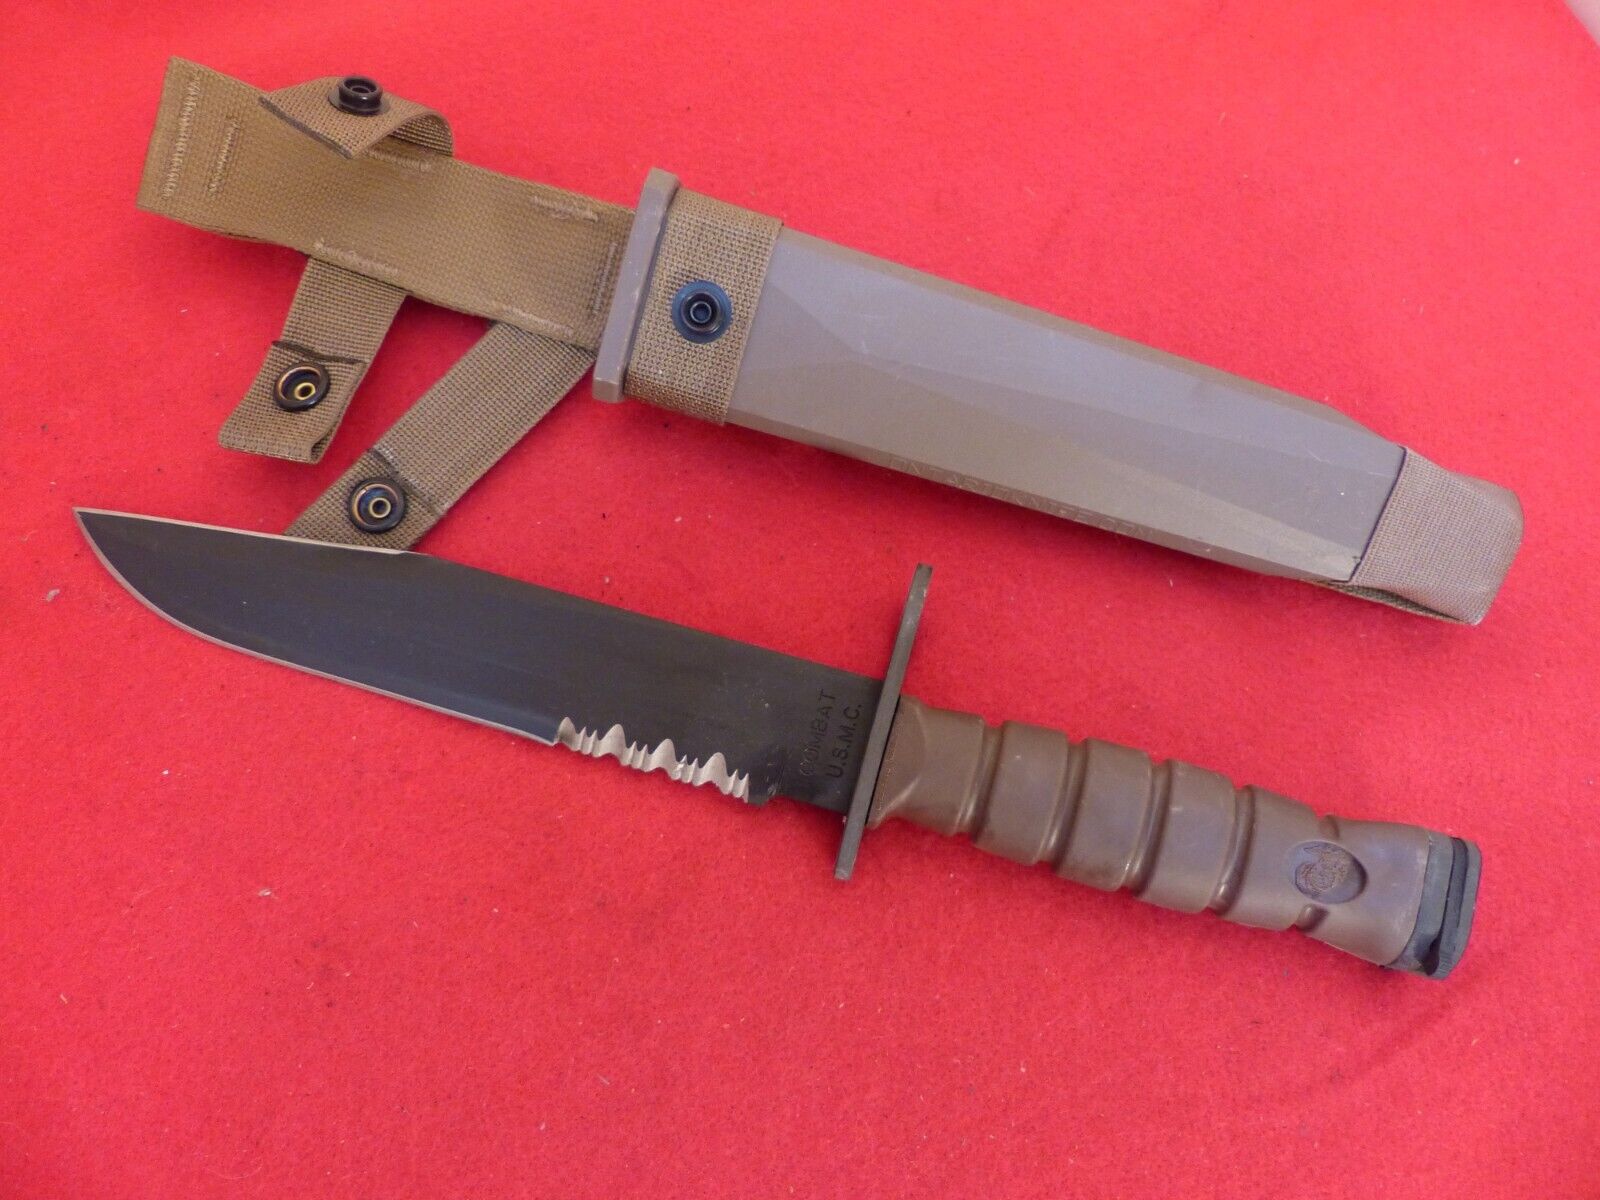 ORIGINAL Ontario USA USMC Combat fixed blade OKC3S bayonet serrated knife